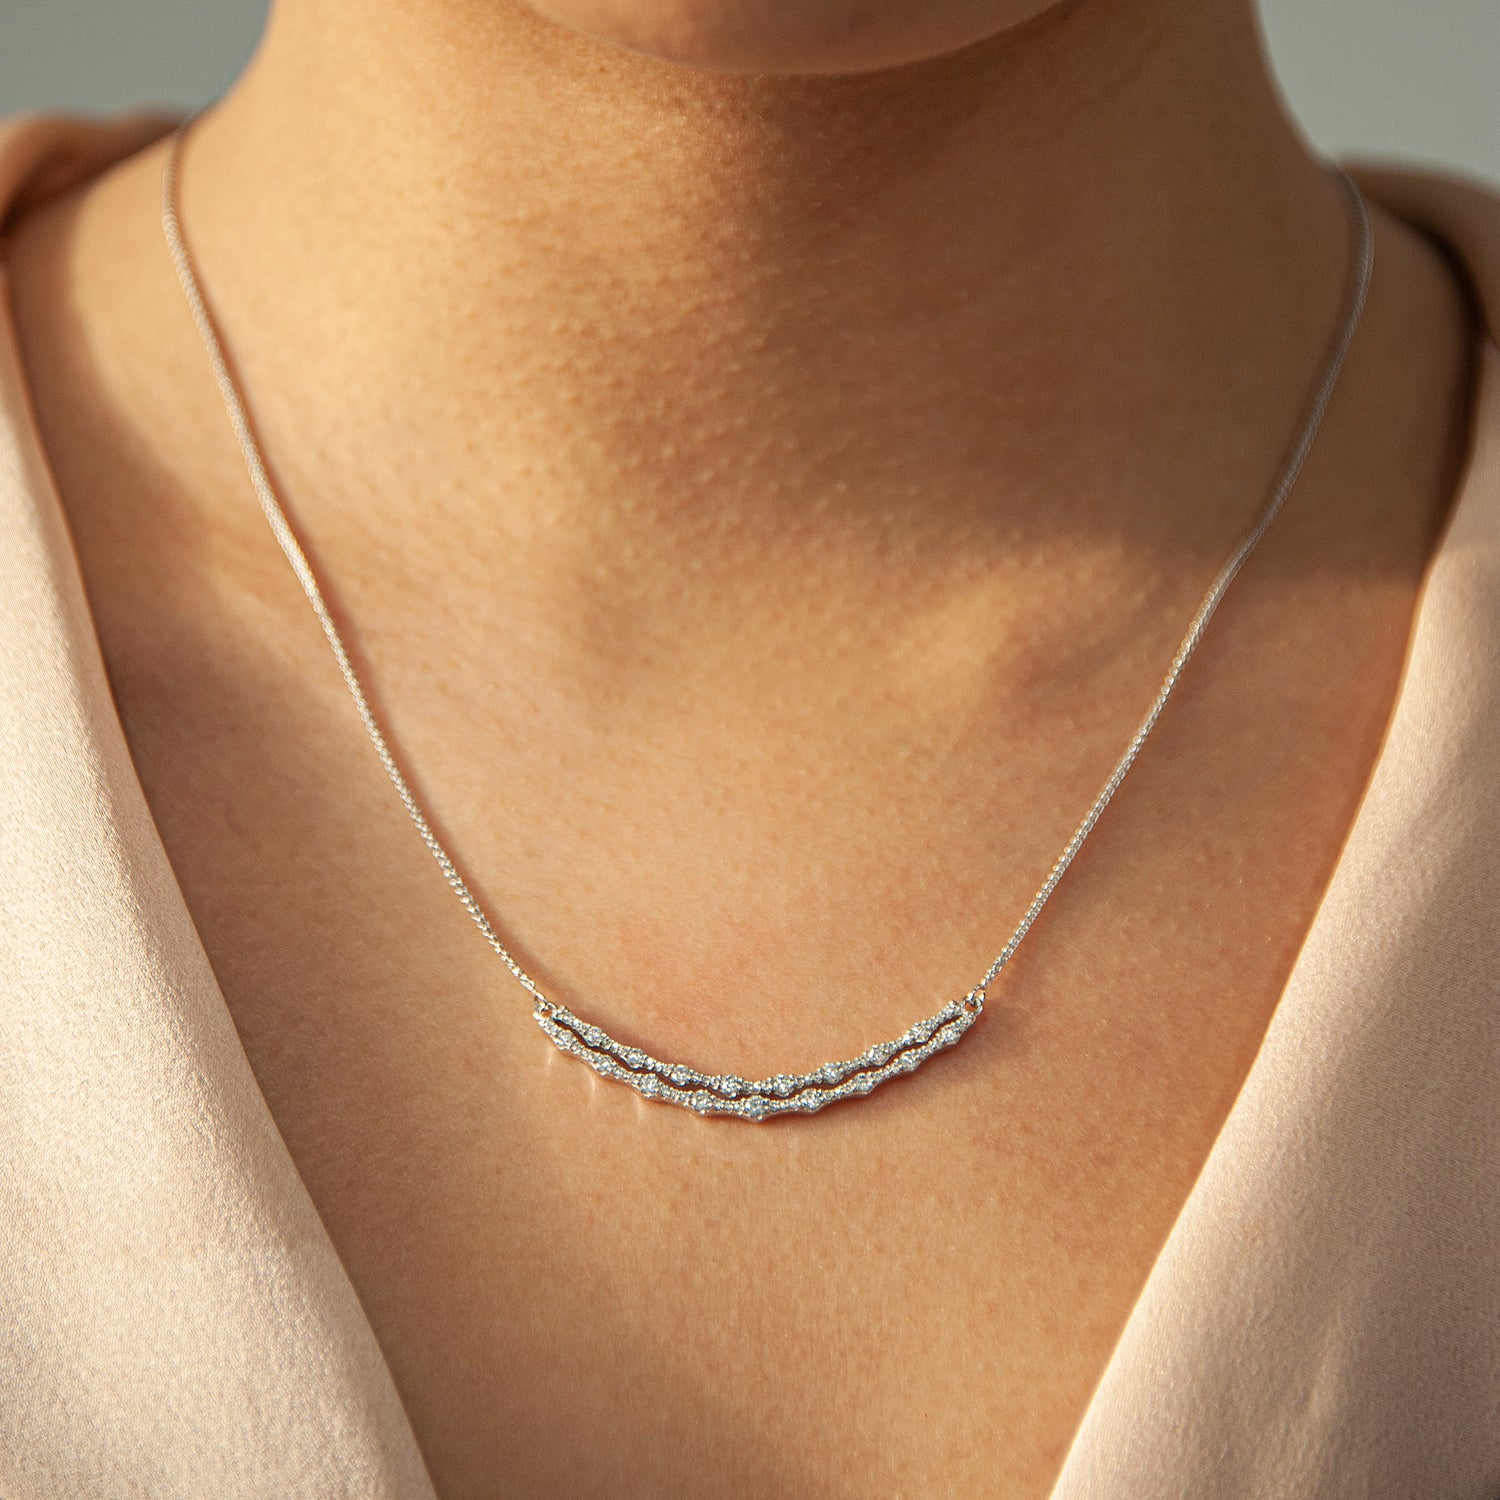 Piare Diamond Necklace for Neck